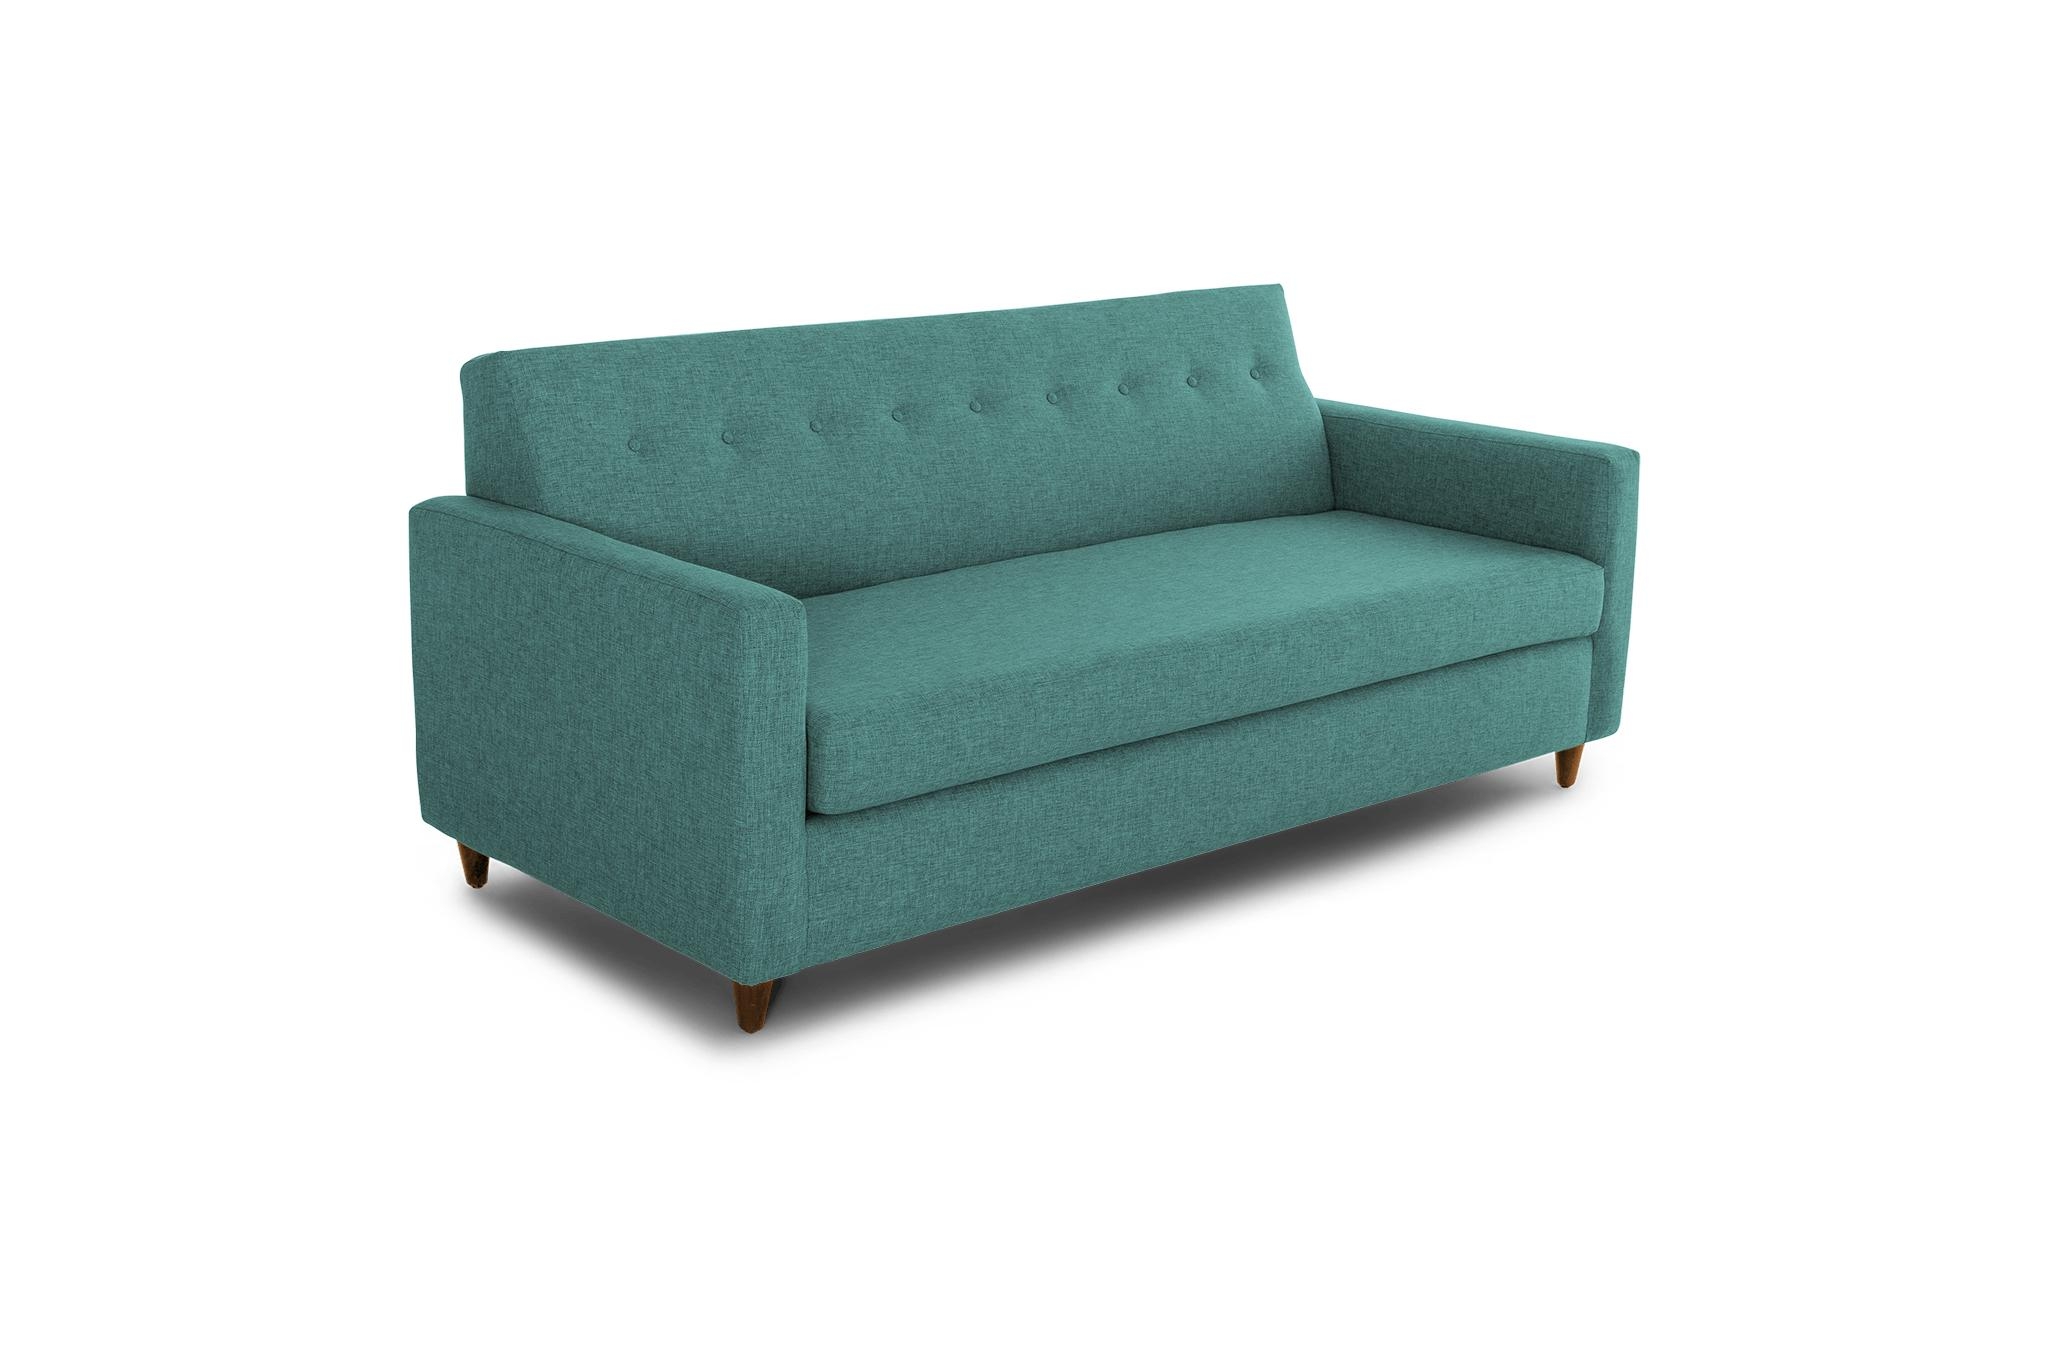 Green Korver Mid Century Modern Sleeper Sofa - Essence Aqua - Mocha - Image 2